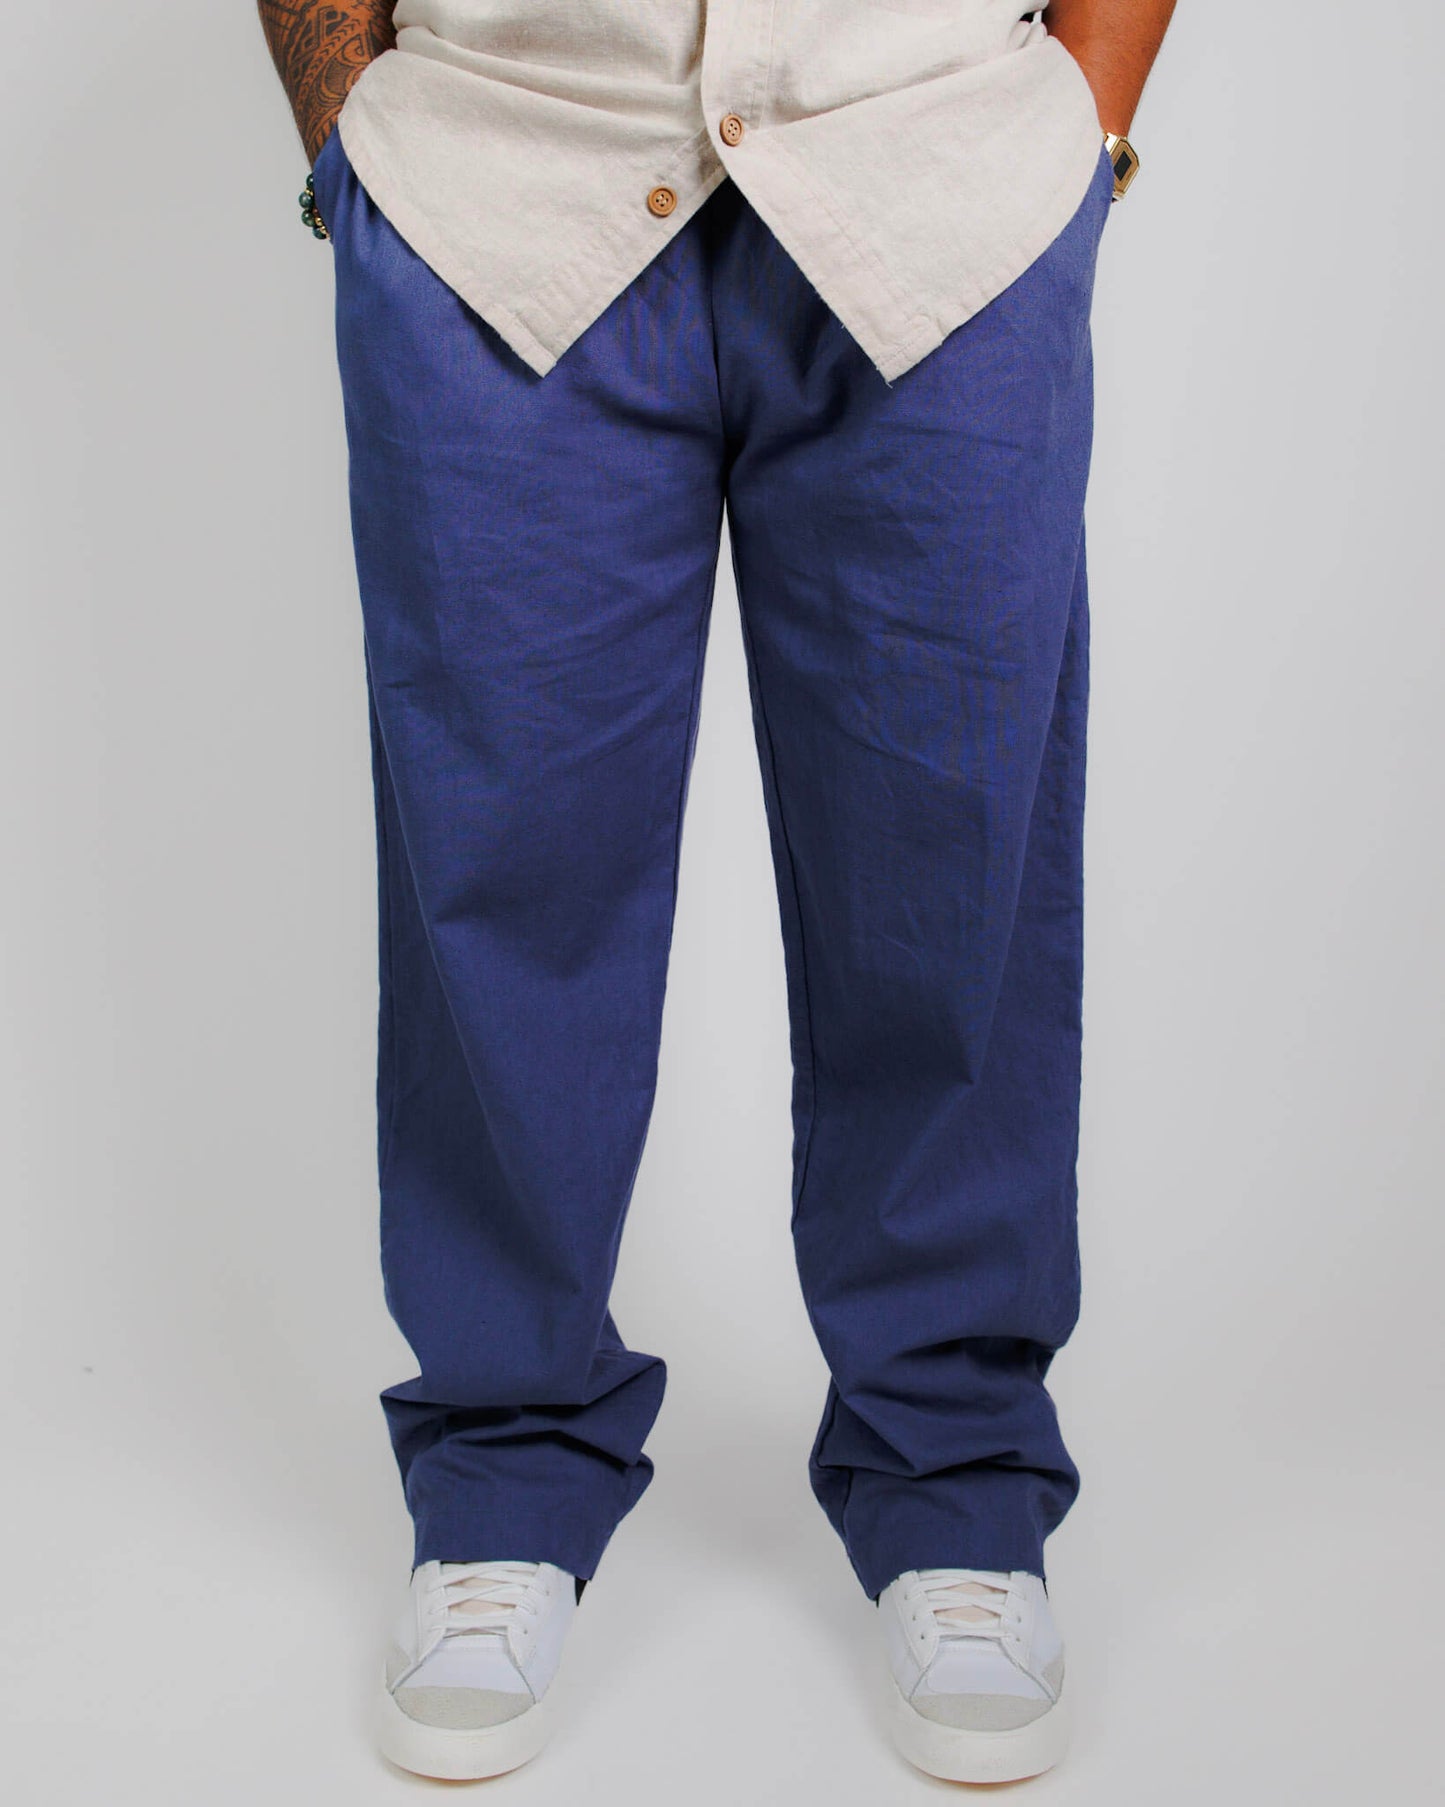 Hemp Linen Pants - Unisex